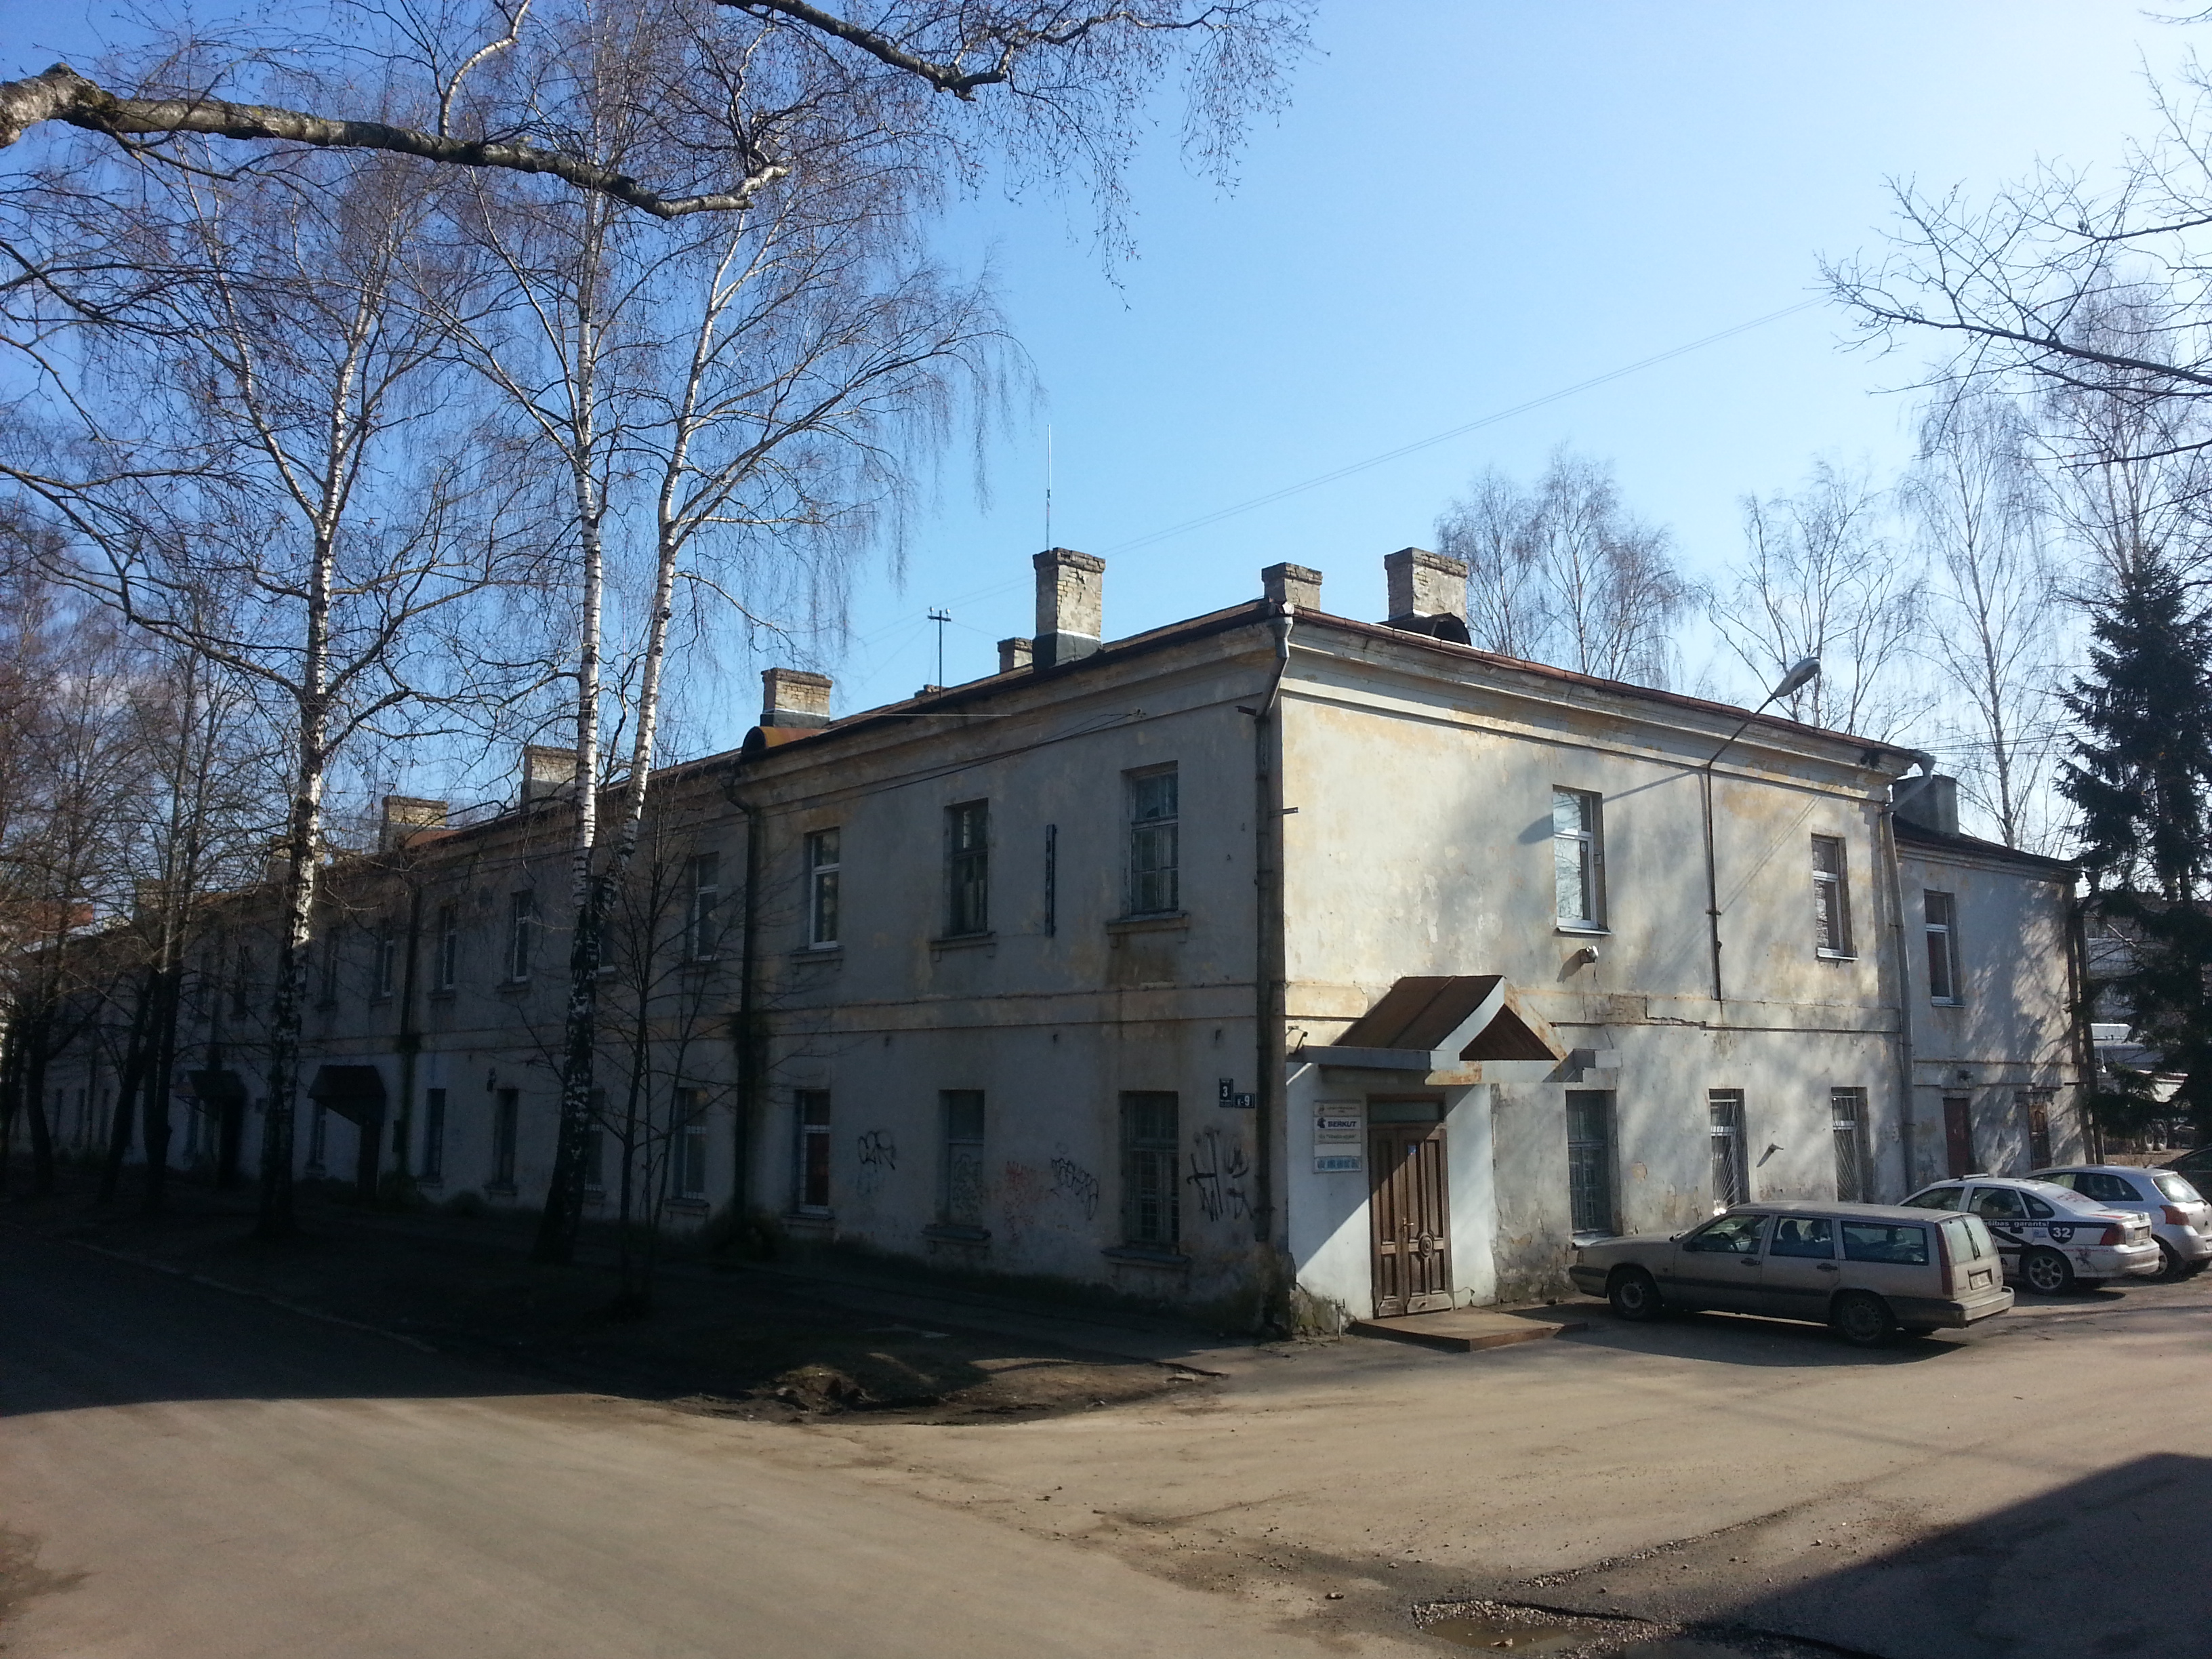 Одно из зданий Панцирских казарм, улица Пулку, Рига. Фото автора